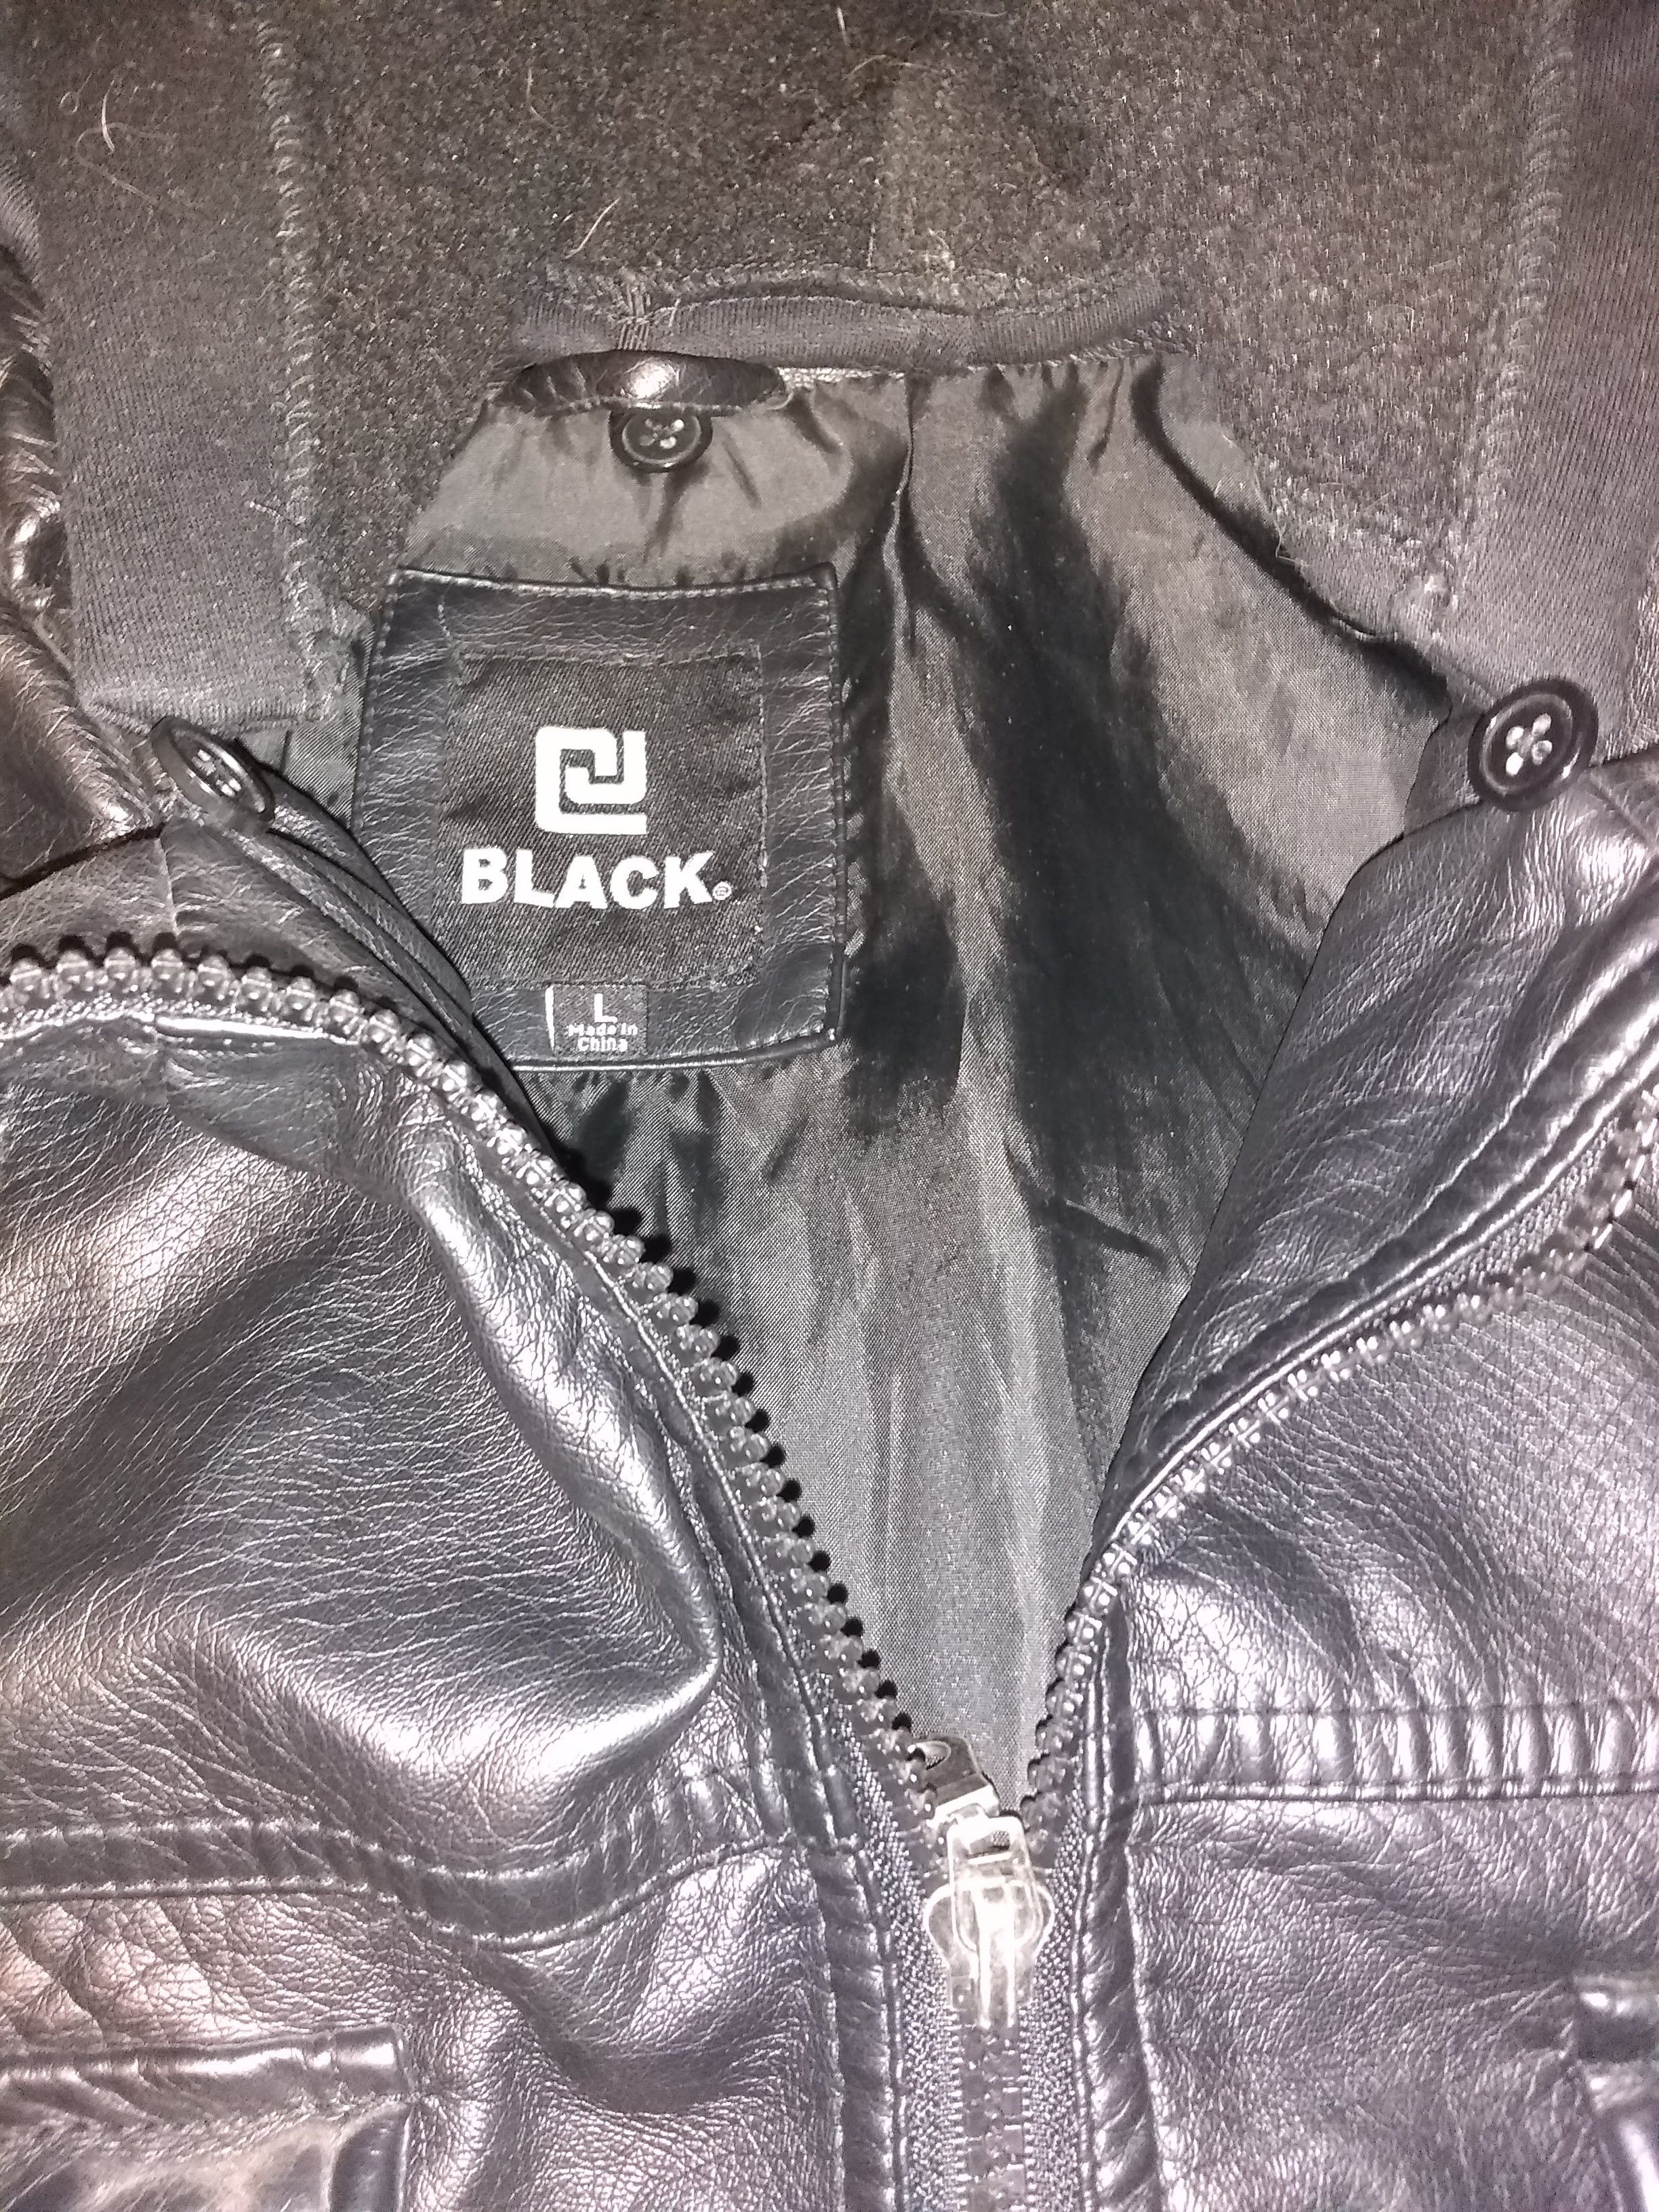 Black Black Men's Leather Motorcycle jacket L Size US L / EU 52-54 / 3 - 4 Thumbnail